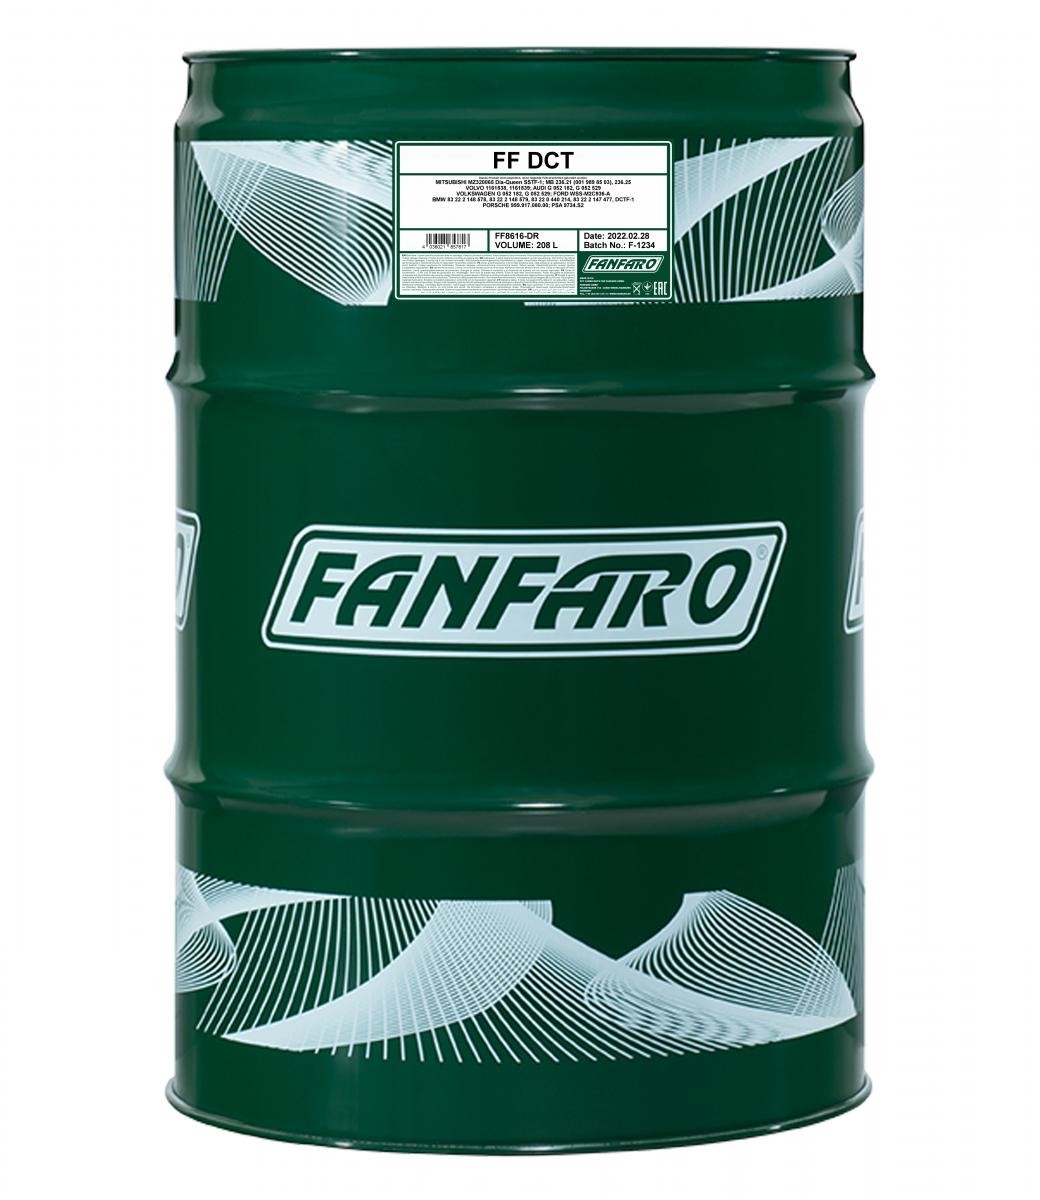 FANFARO DCT FF8616-DR Manual Transmission Oil Capacity: 208l, ATF DCT